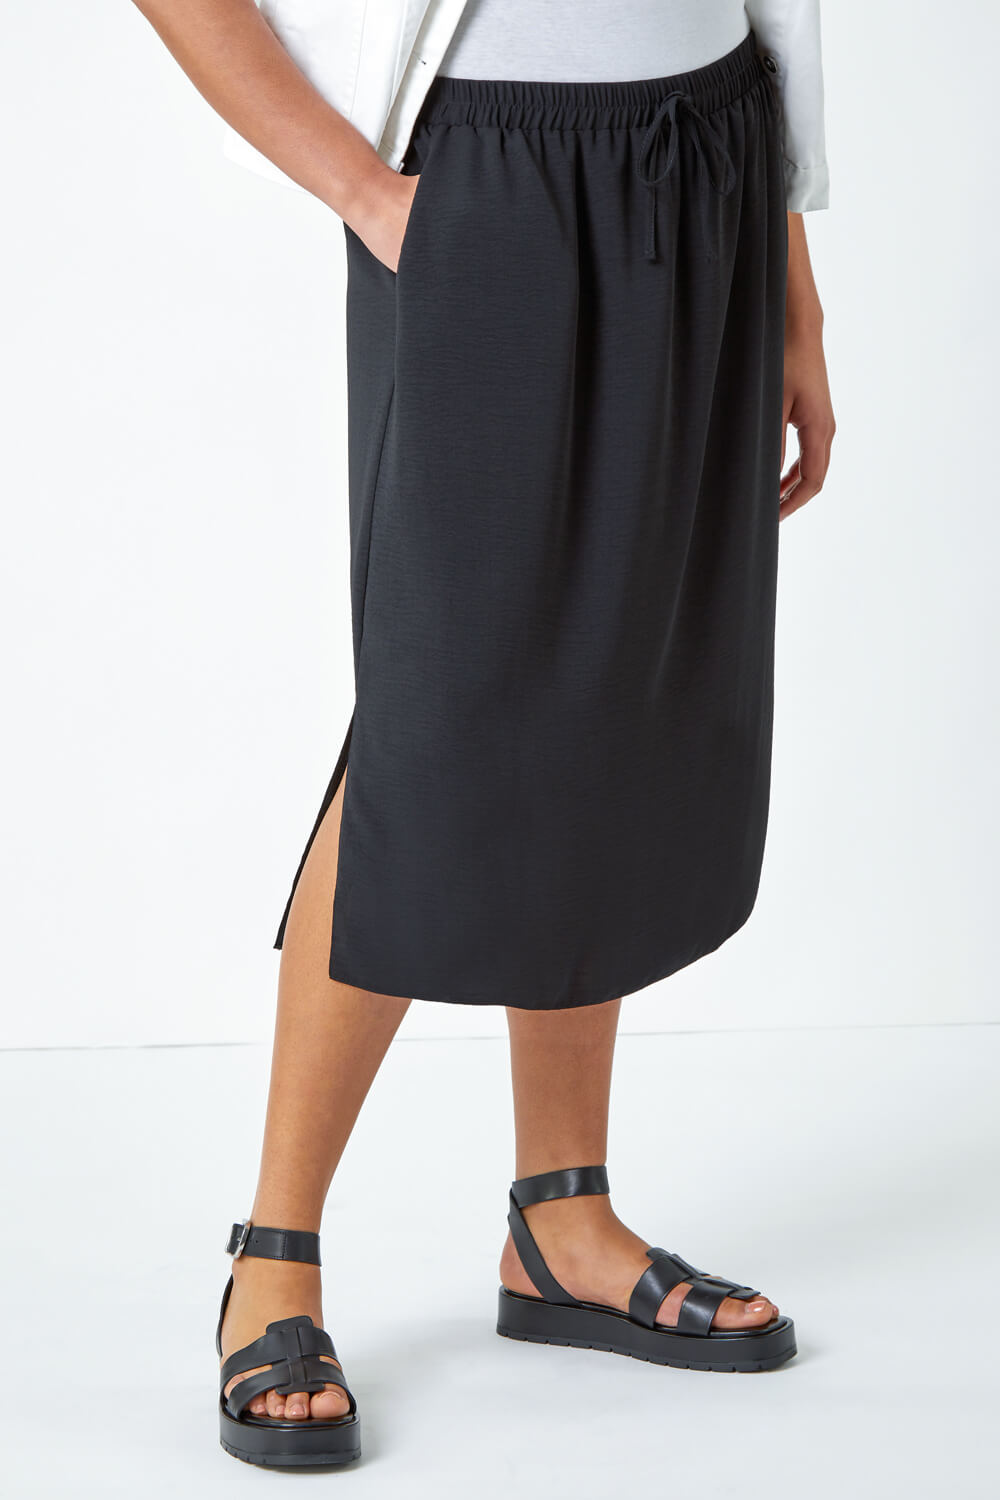 Black Curve Linen Look Midi Skirt, Image 4 of 5